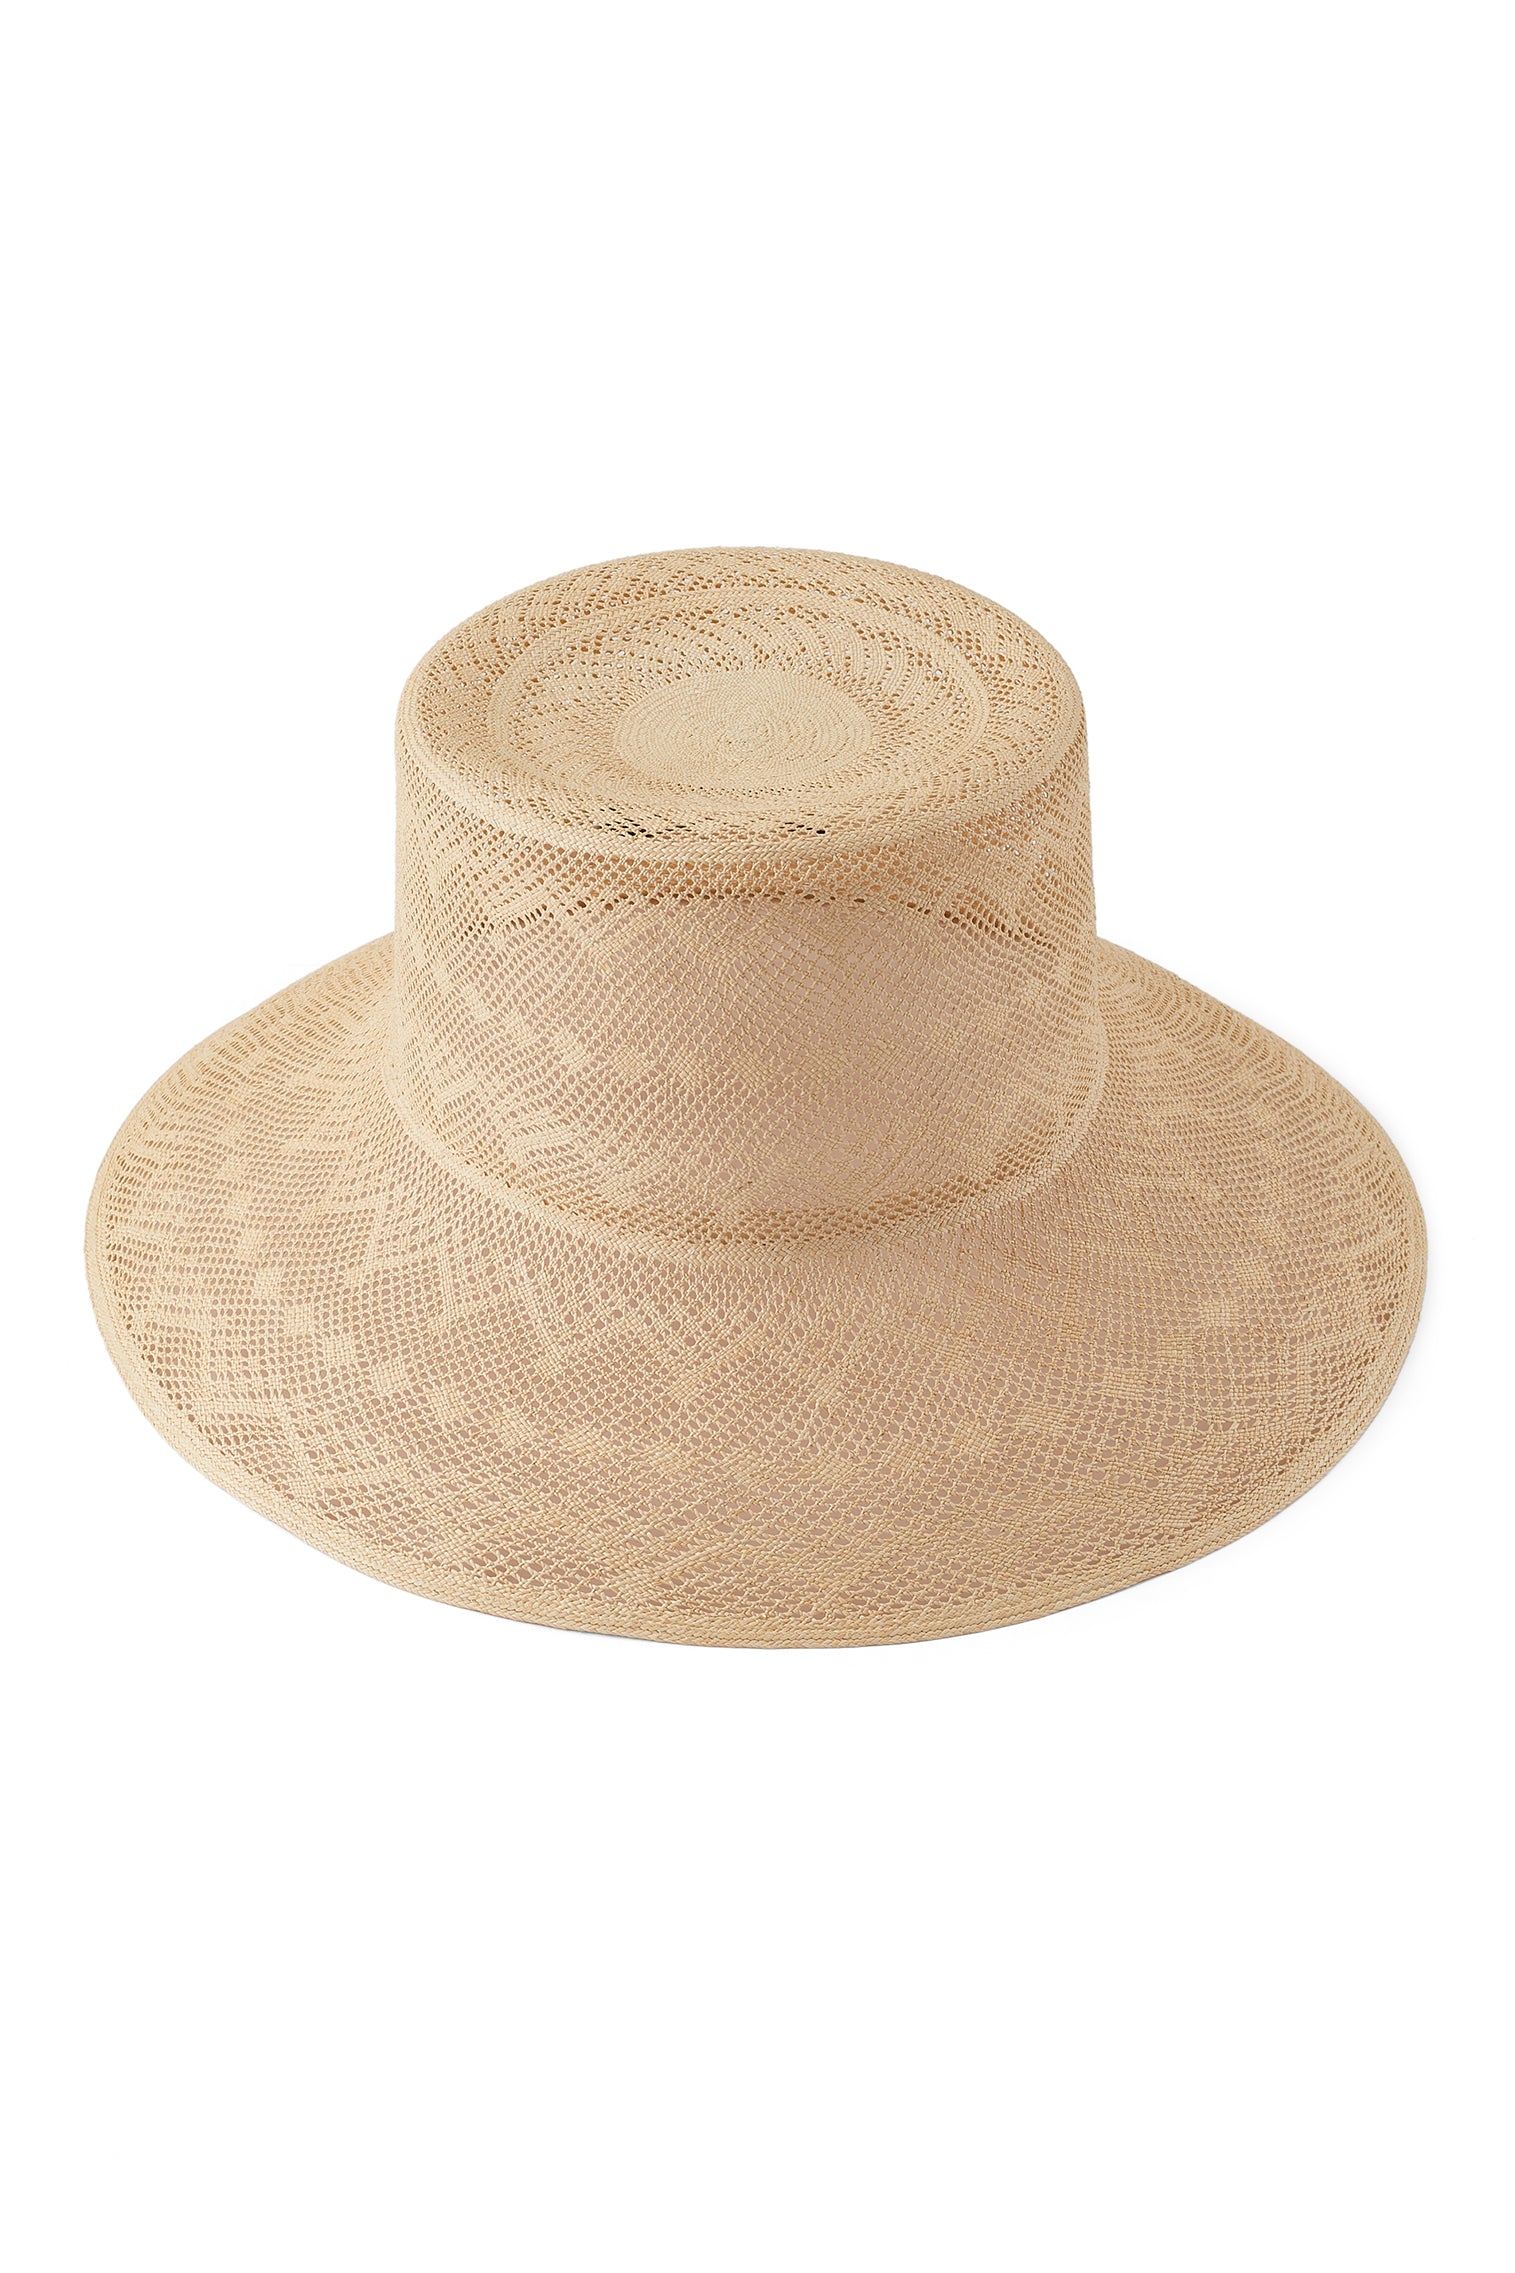 Isla Woven Panama - The Bespoke Embroidered Panama Hat Collection - Lock & Co. Hatters London UK